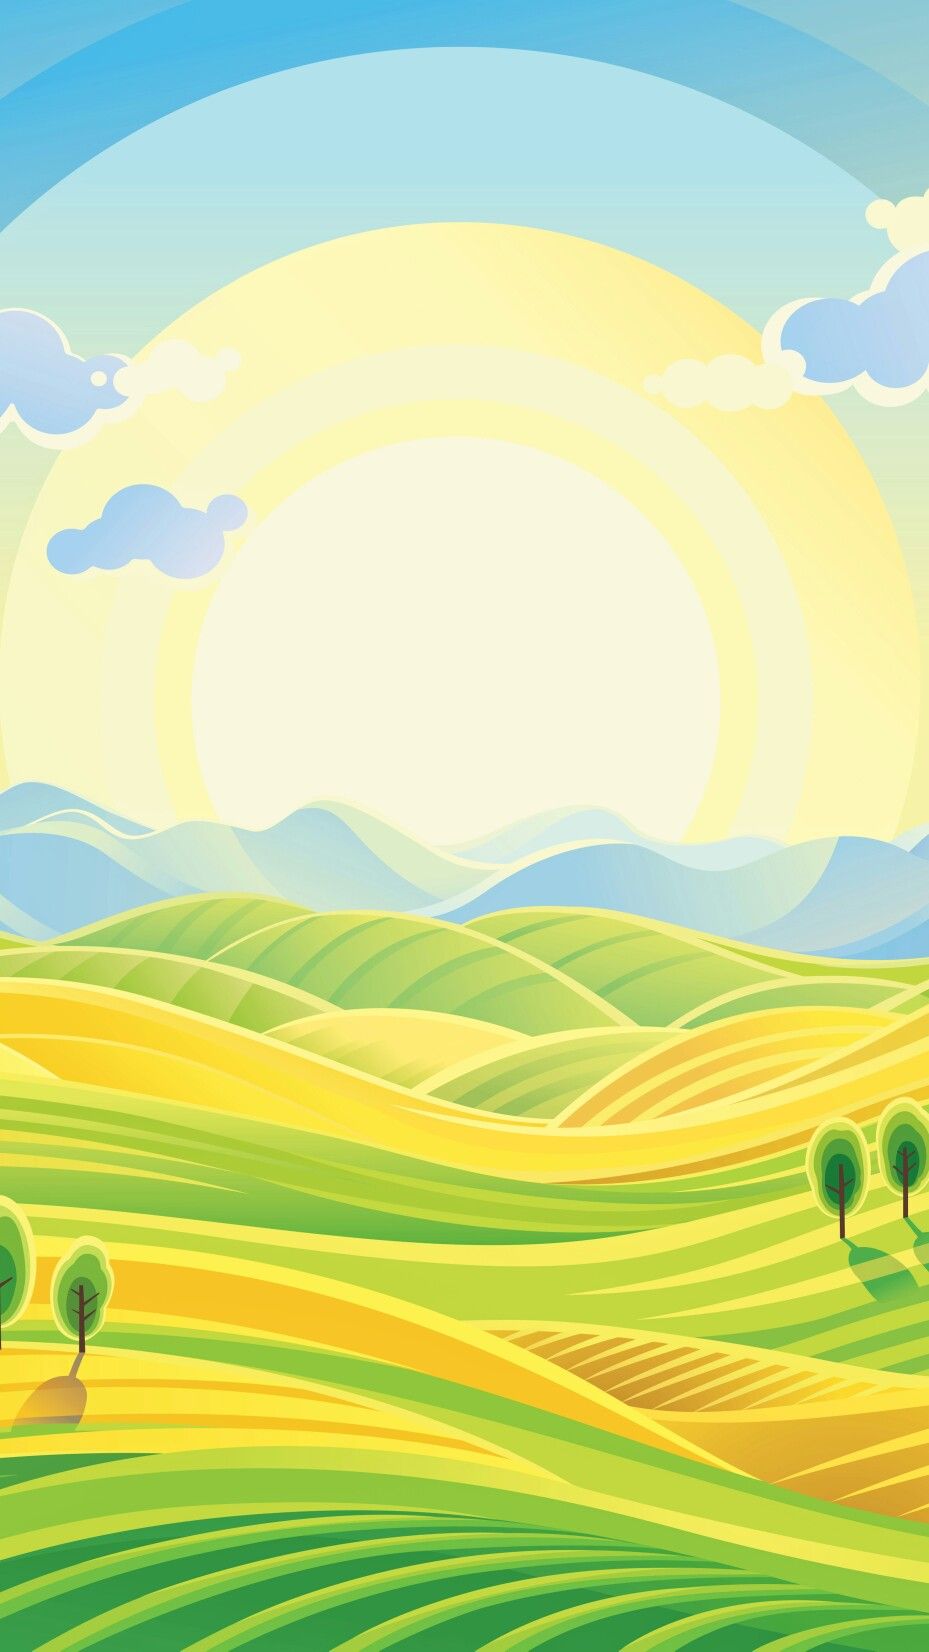 Bright Summer Day Landscape Illustration Graphic Wallpaper